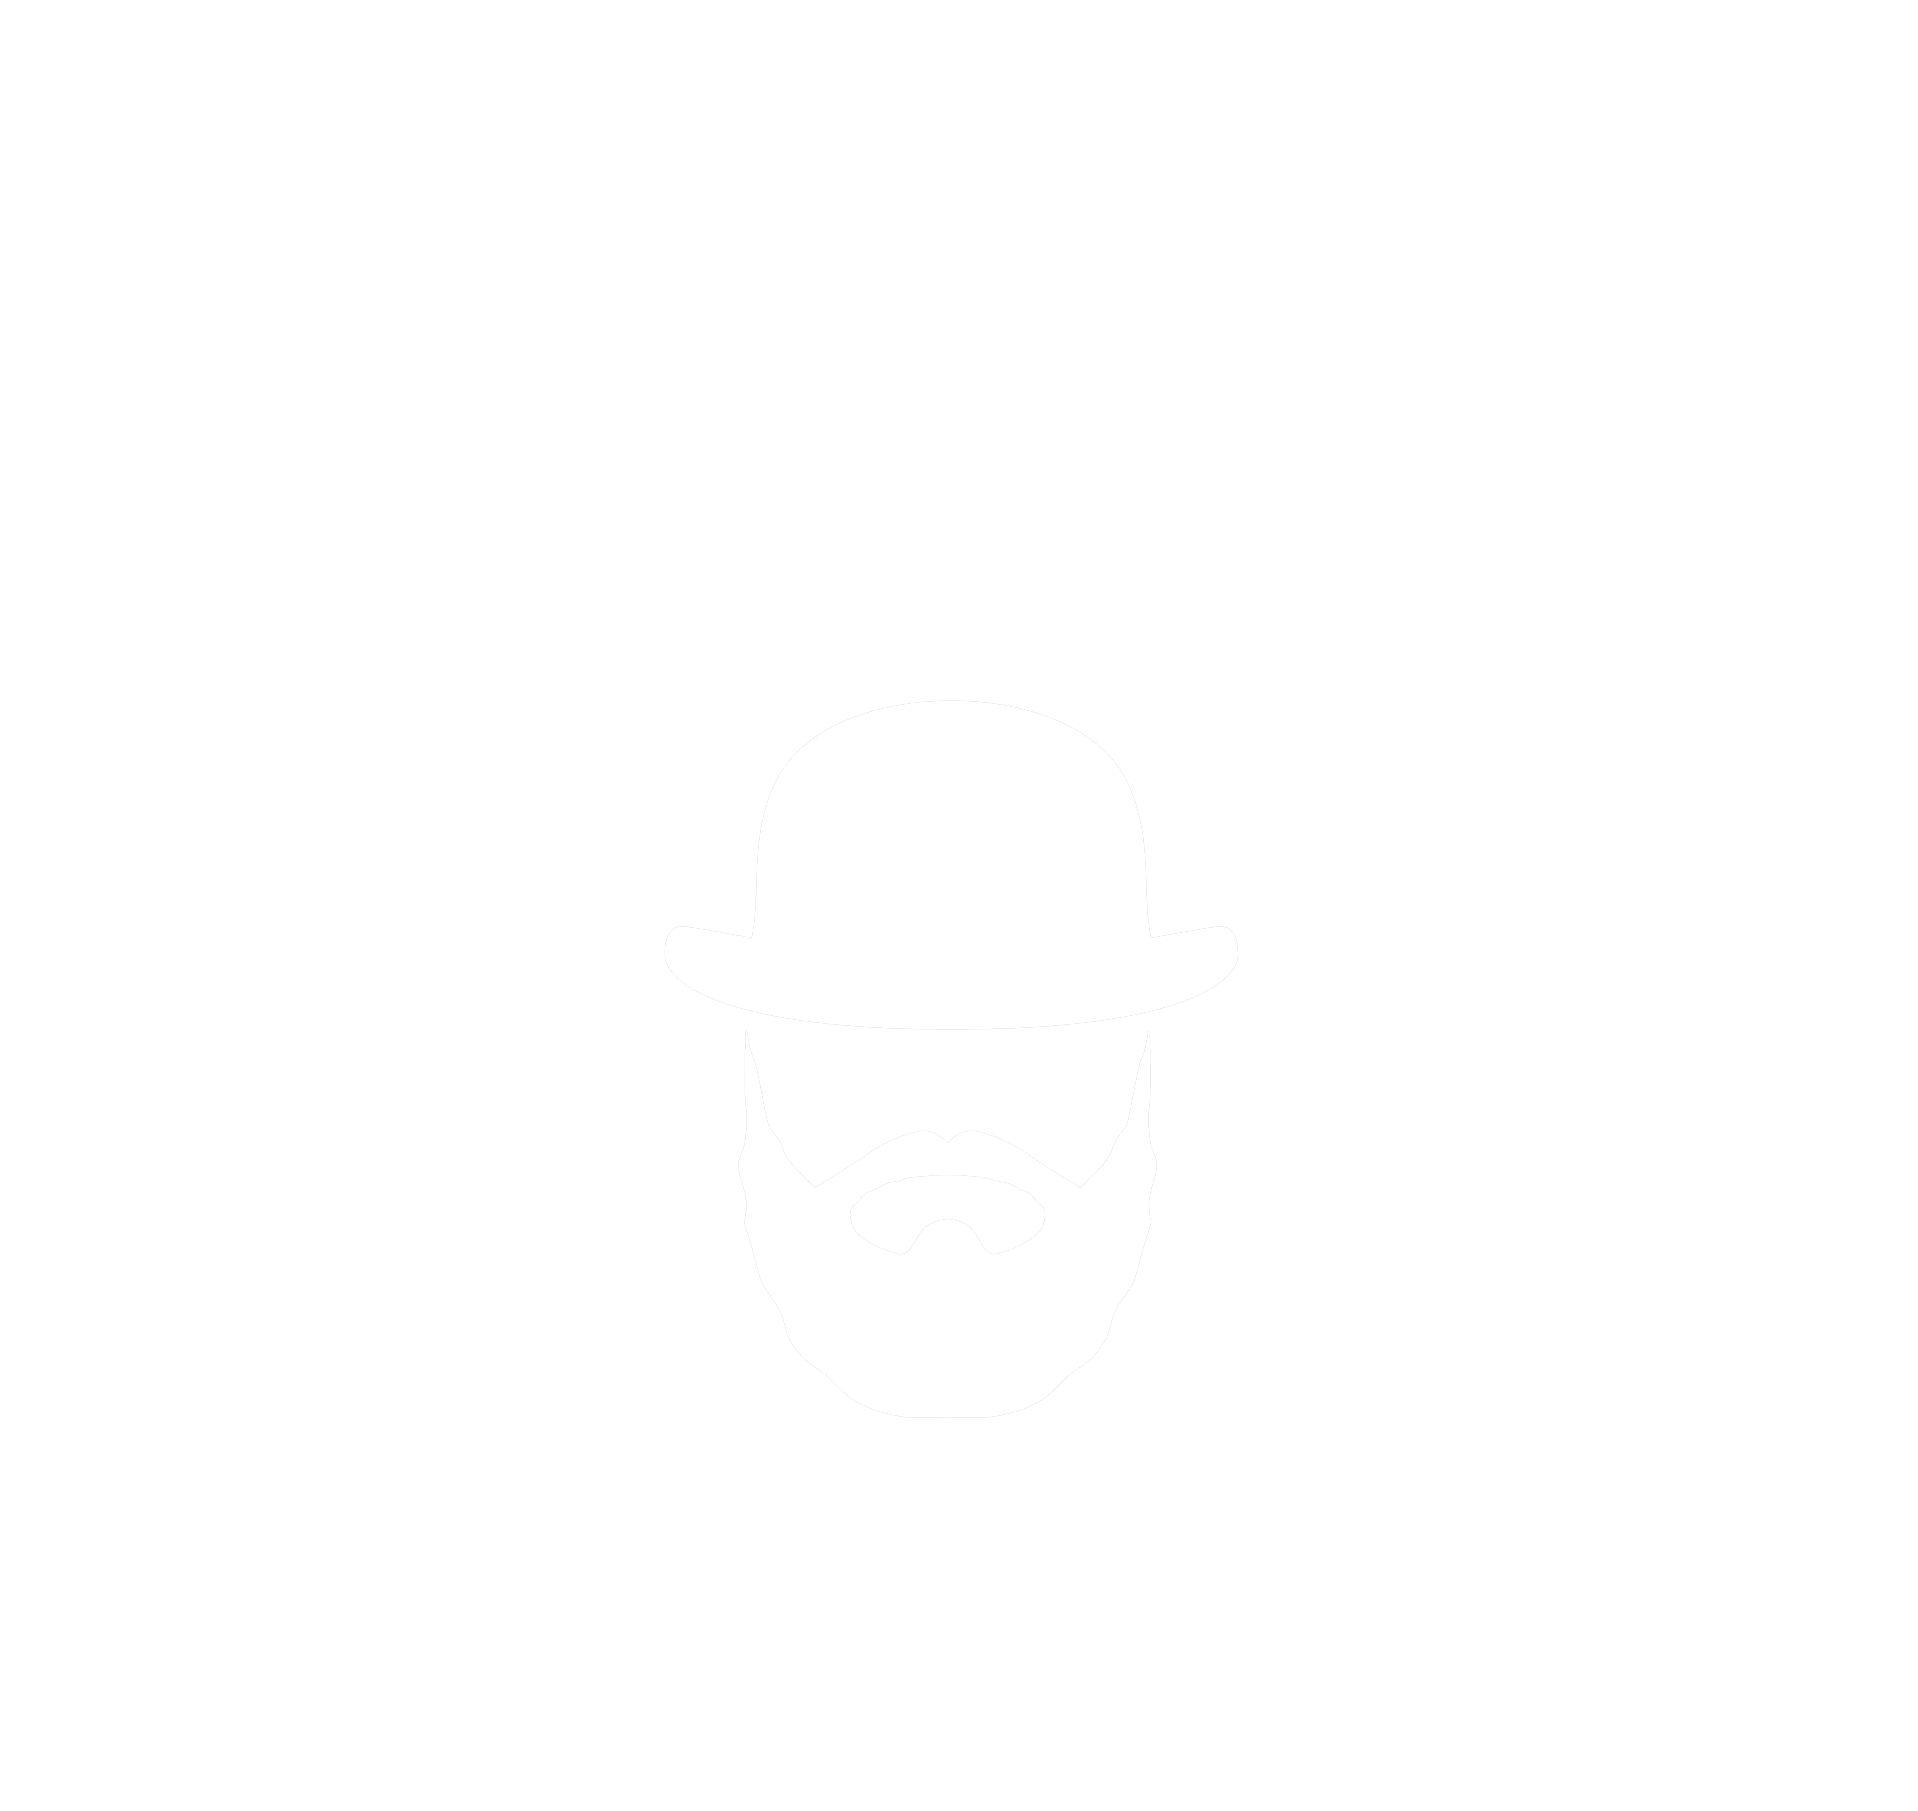 the gentleman bard